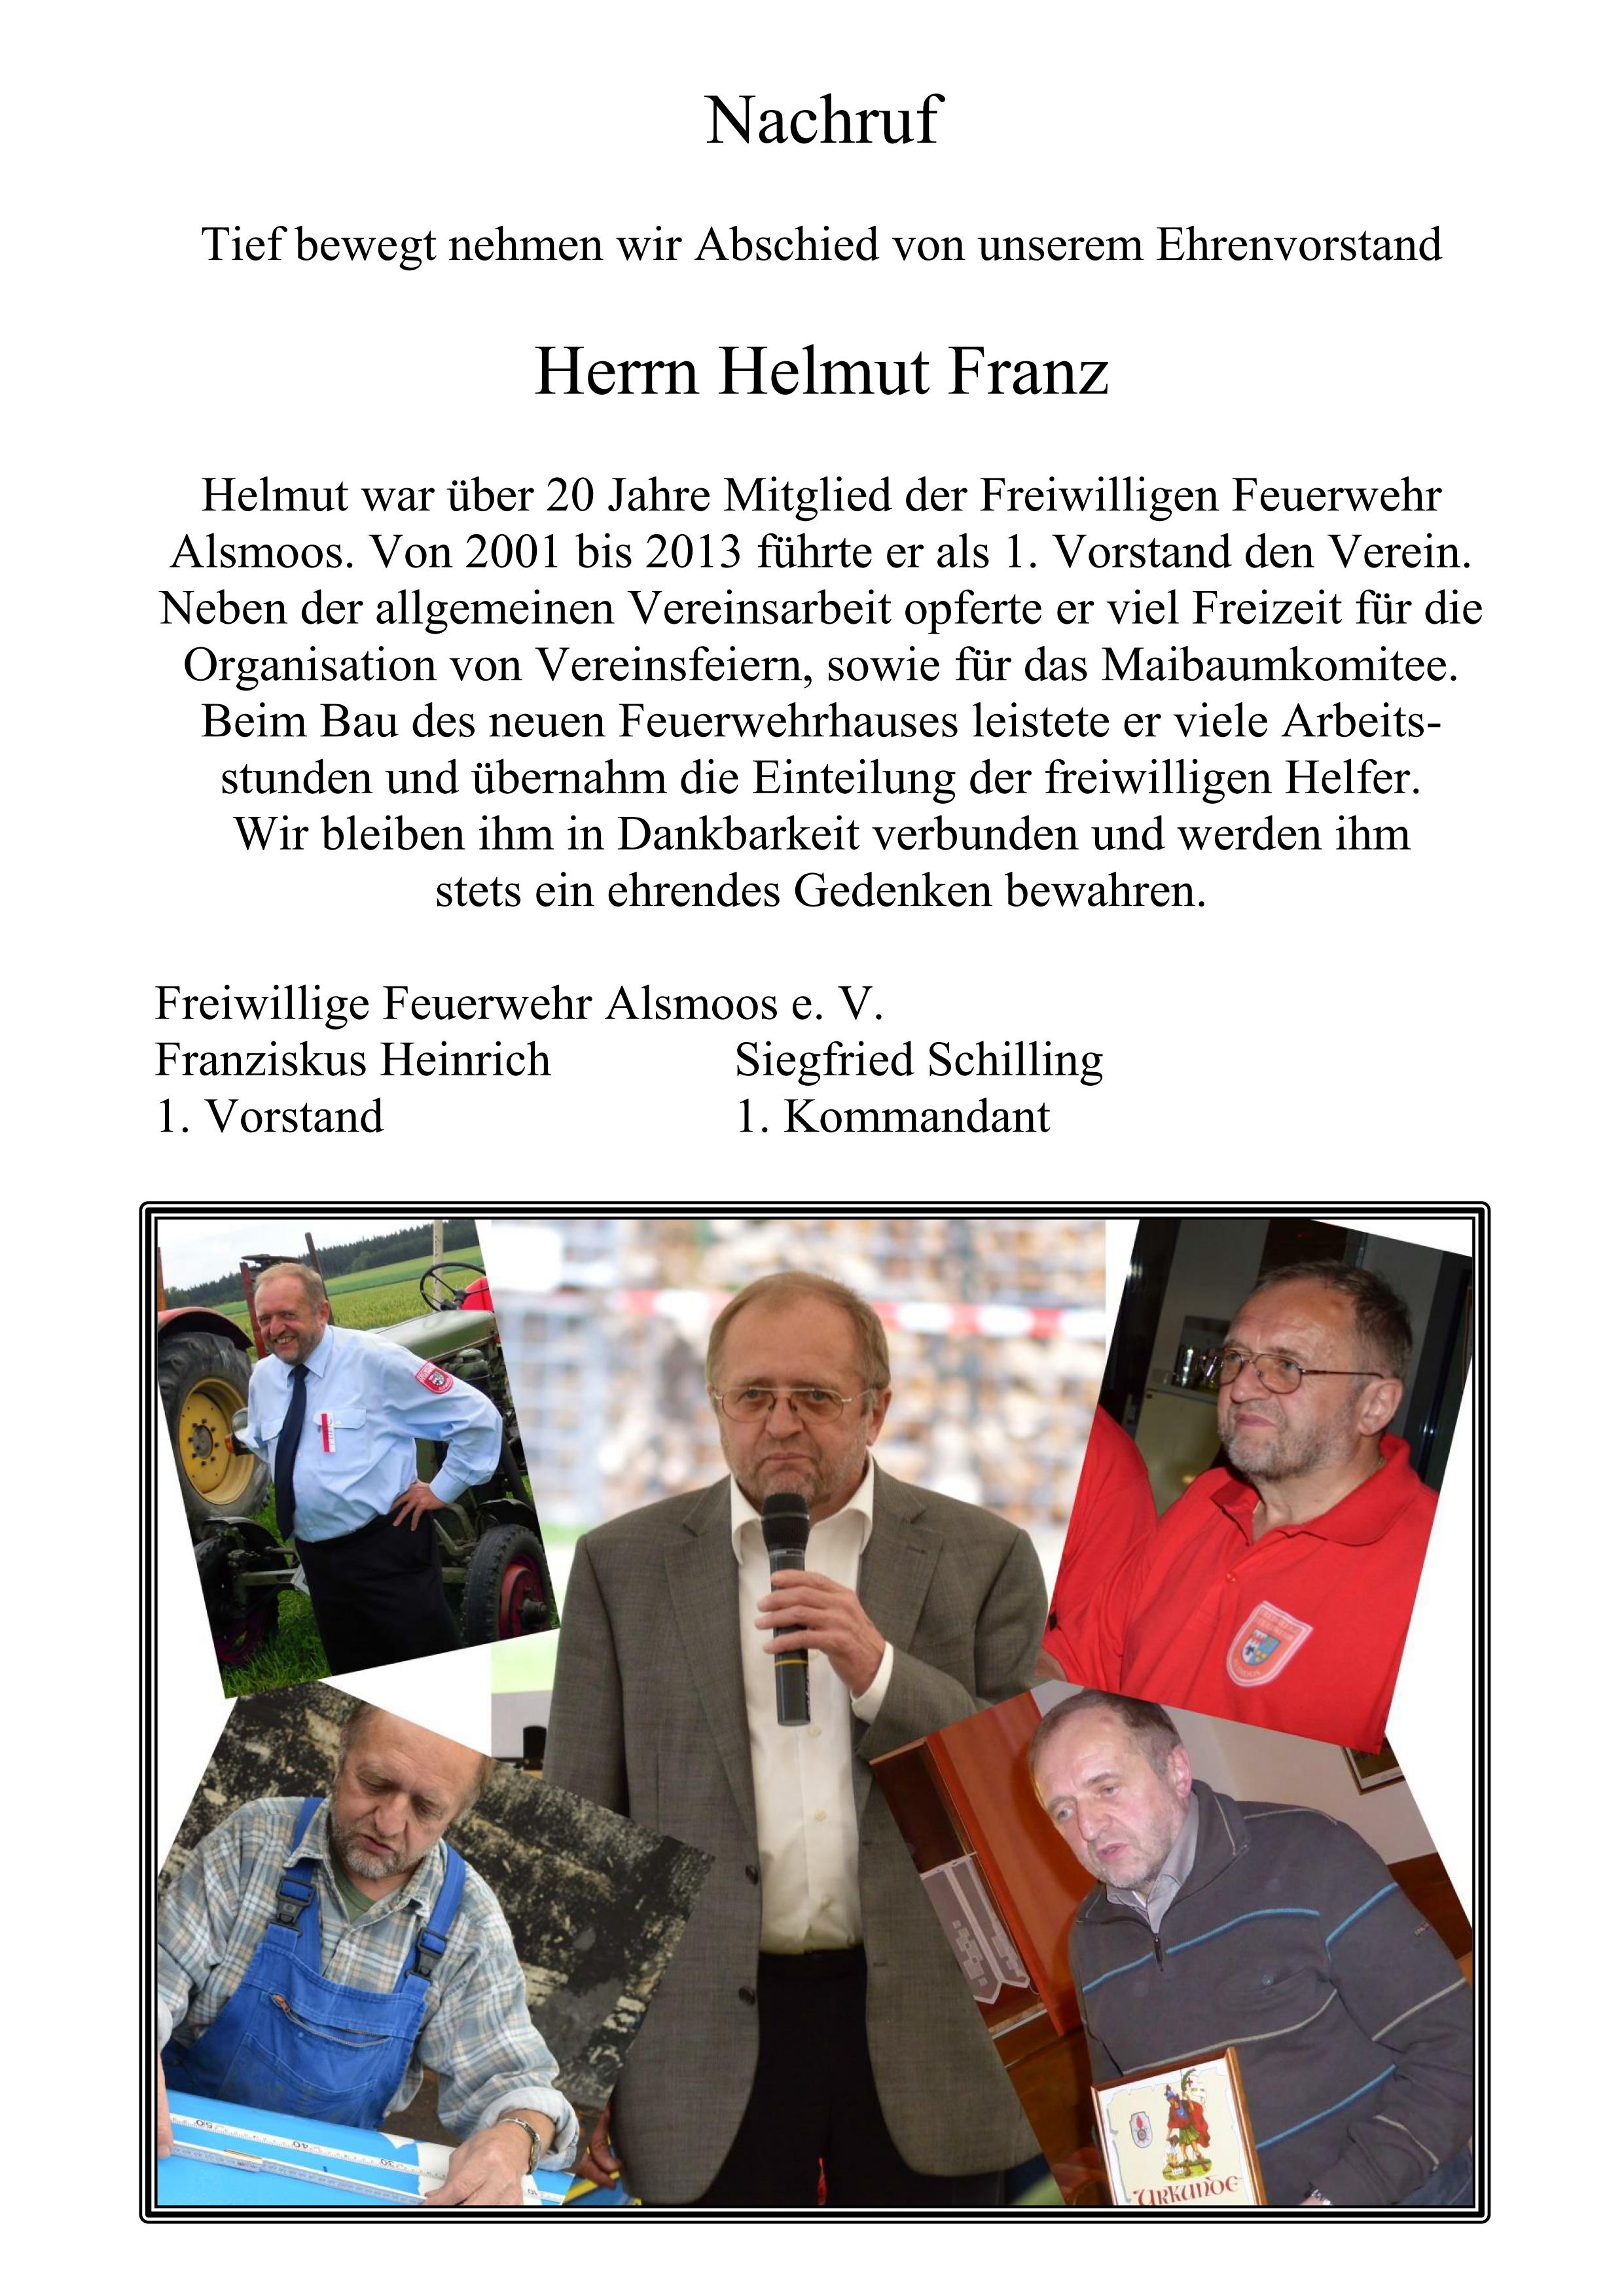 Nachruf Helmut Franz